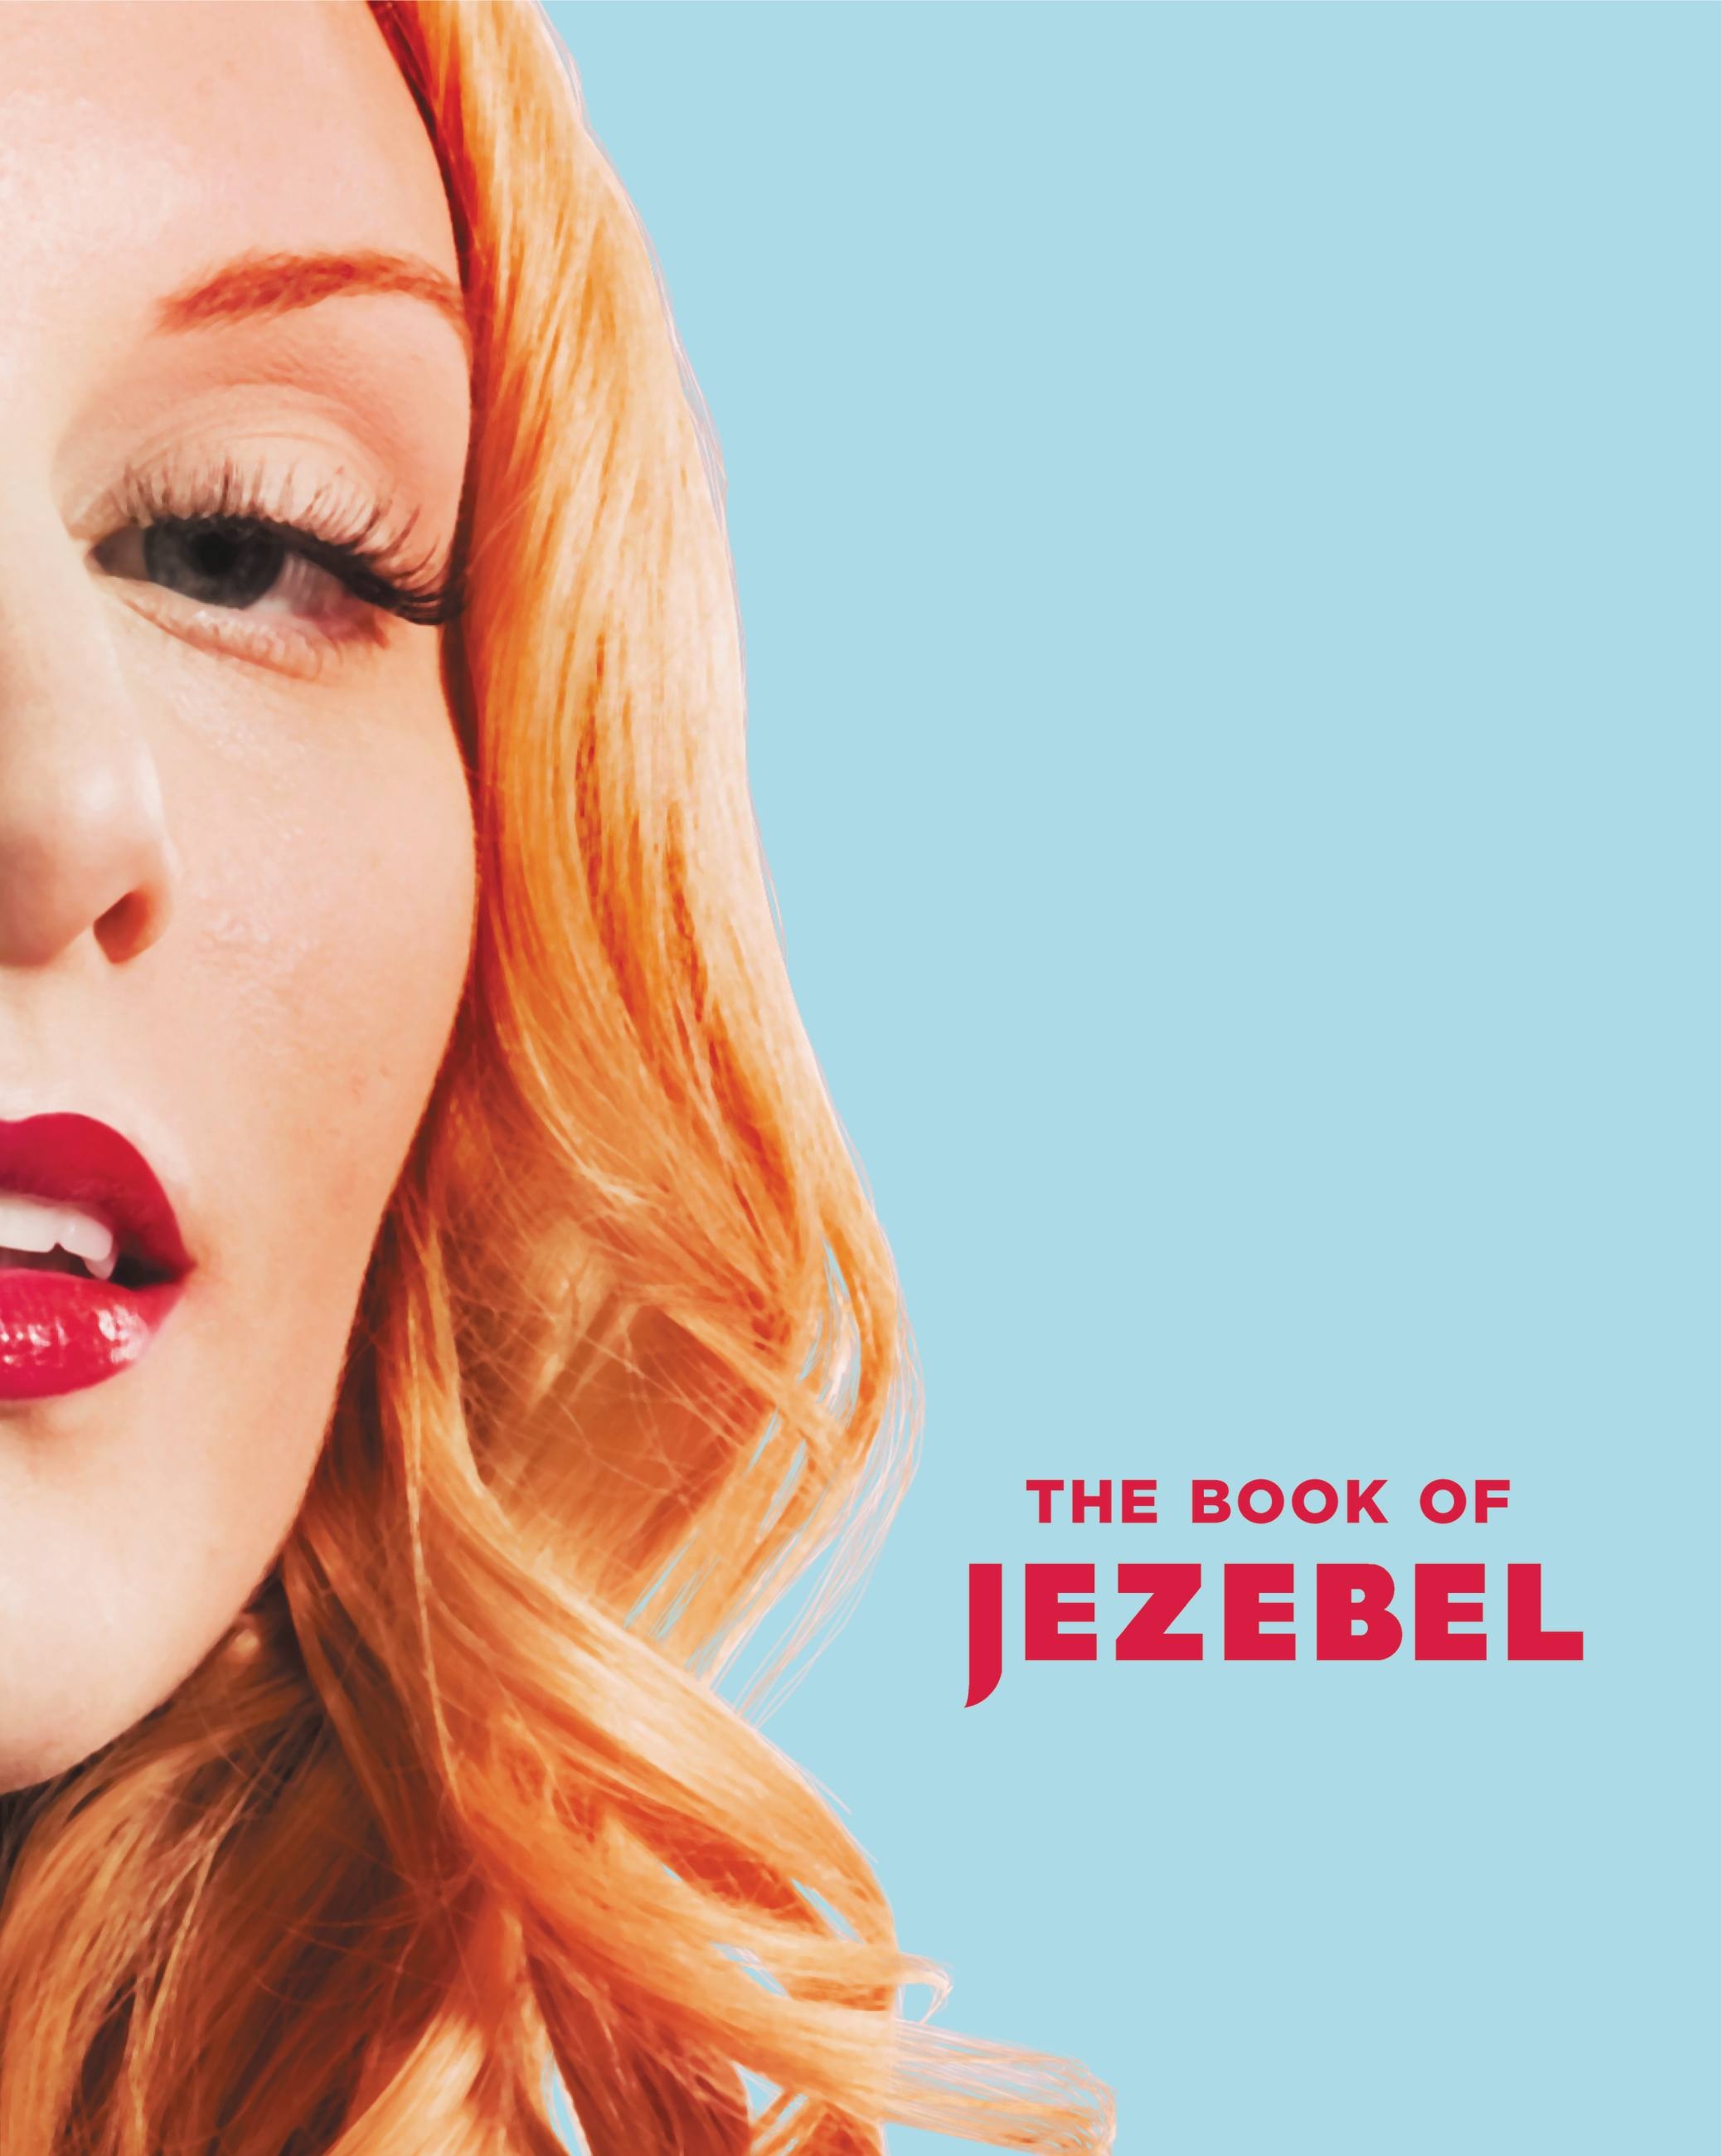 Missy Elliott Porn Magazine - The Book of Jezebel by Anna Holmes | Hachette Book Group